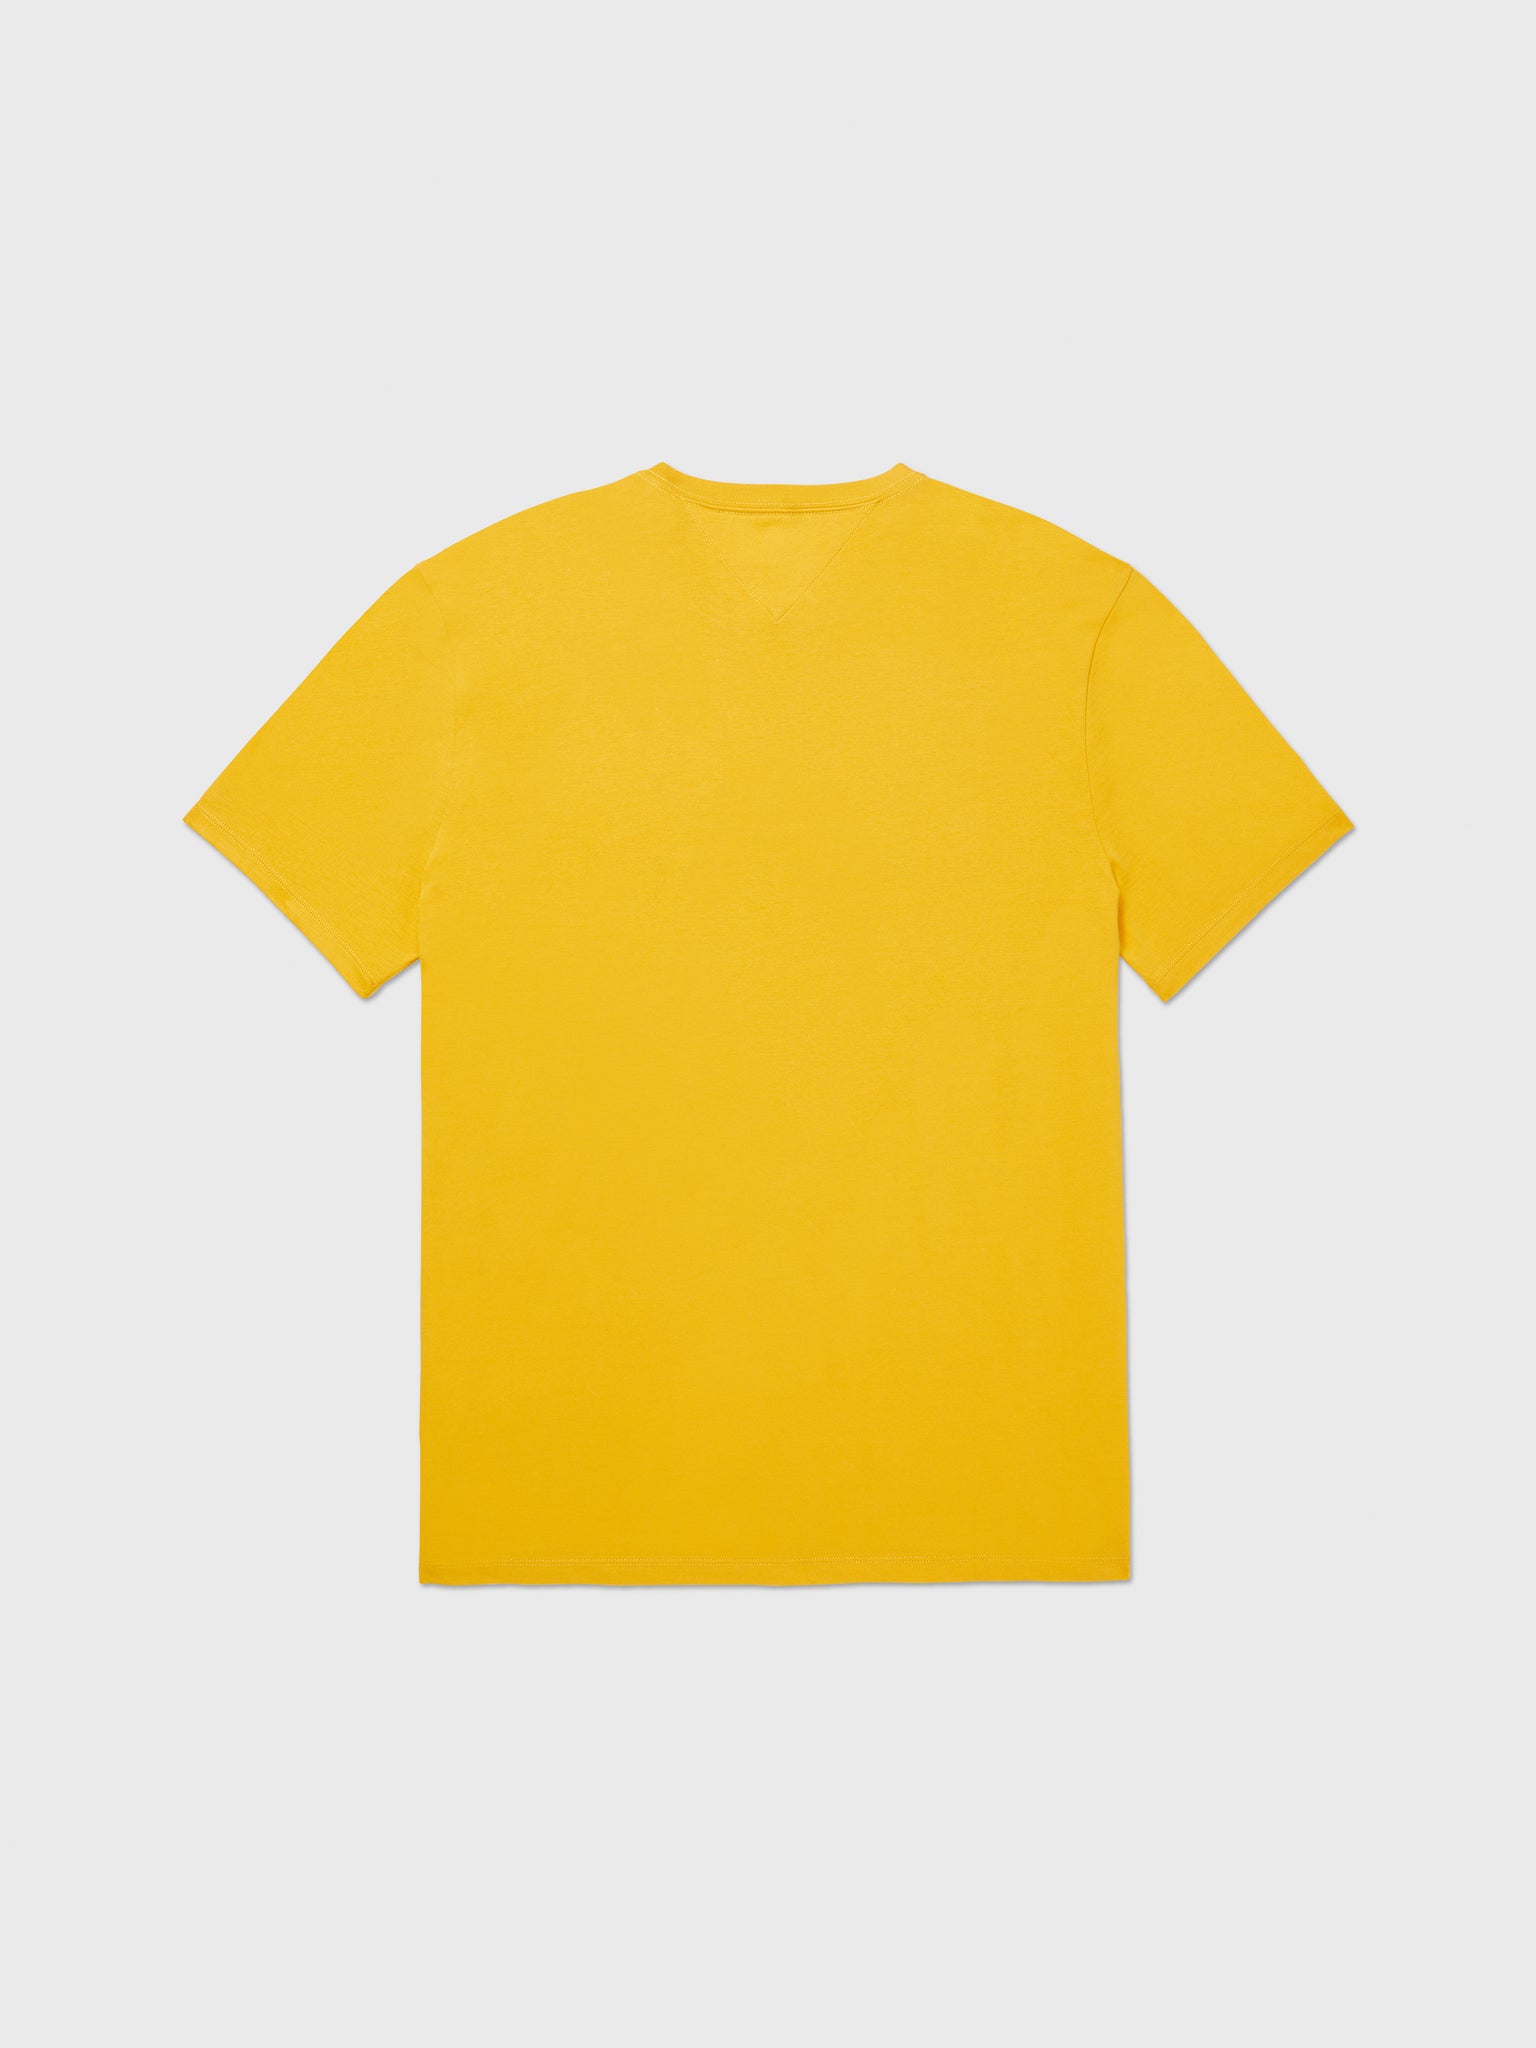 Flag Stripe Tee (Mens) - Courtside Yellow